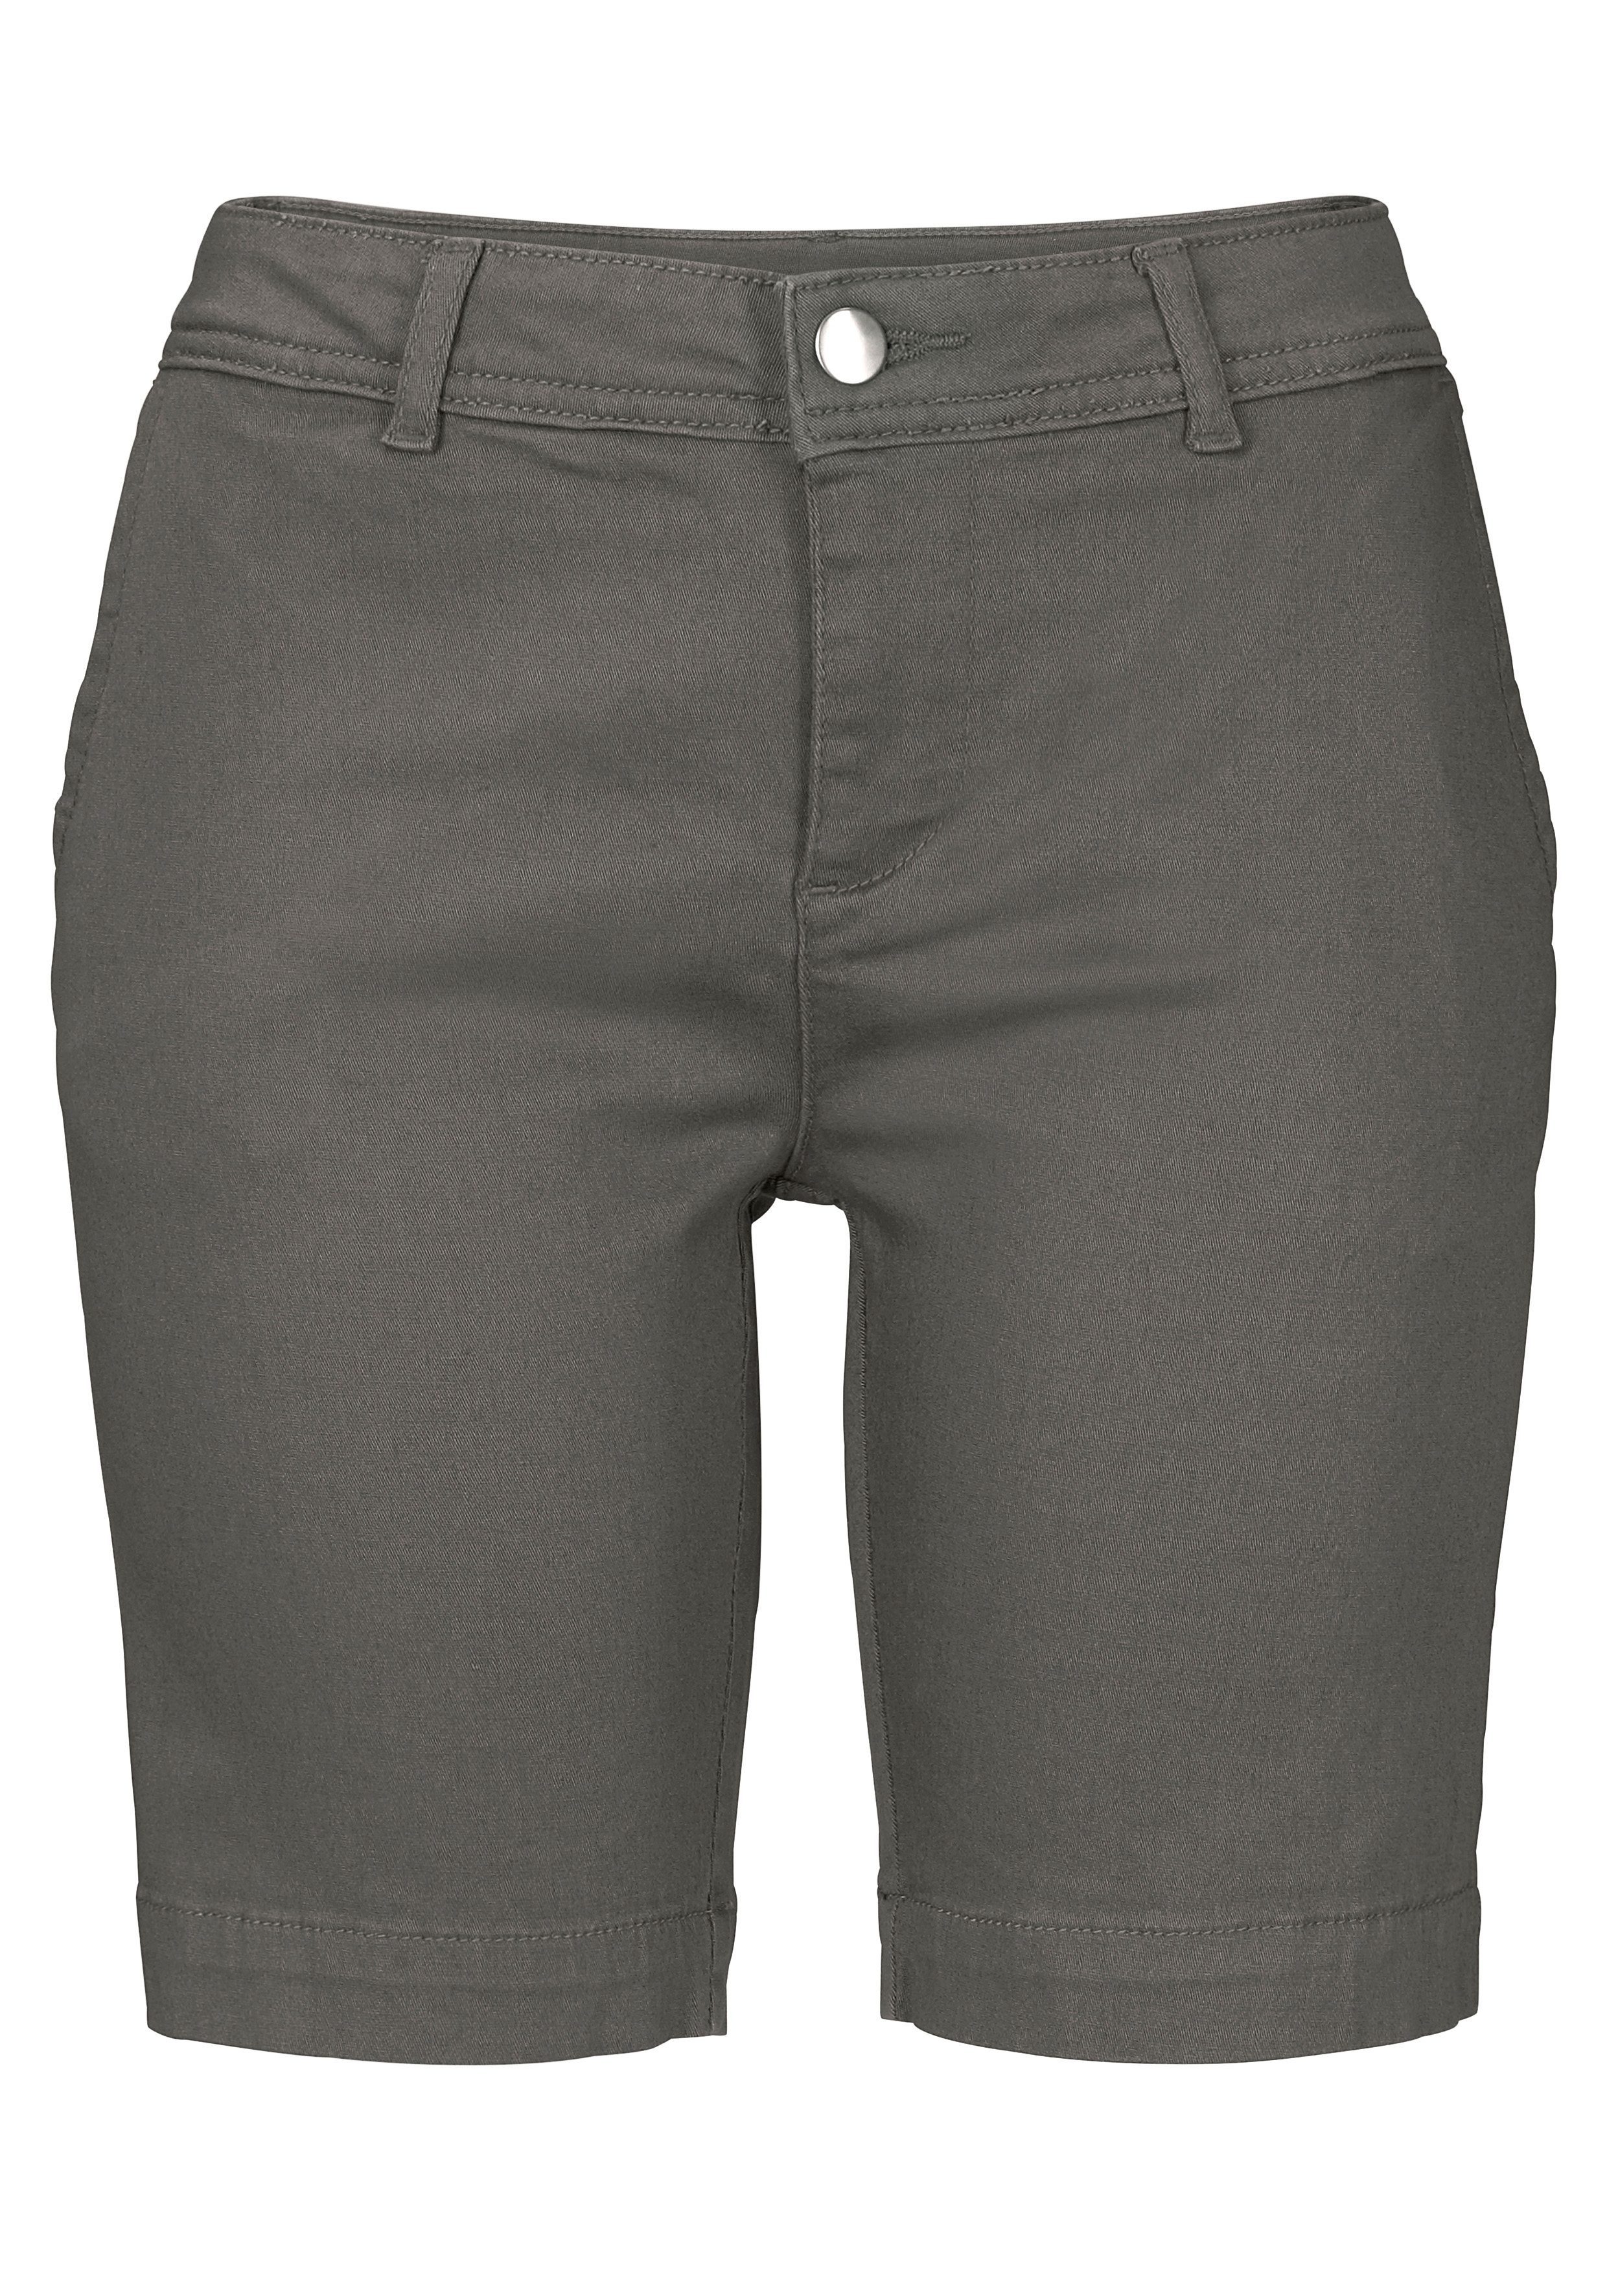 LASCANA Bermudas khaki kurze elastischer Baumwolle, Shorts aus zum Hose, Krempeln